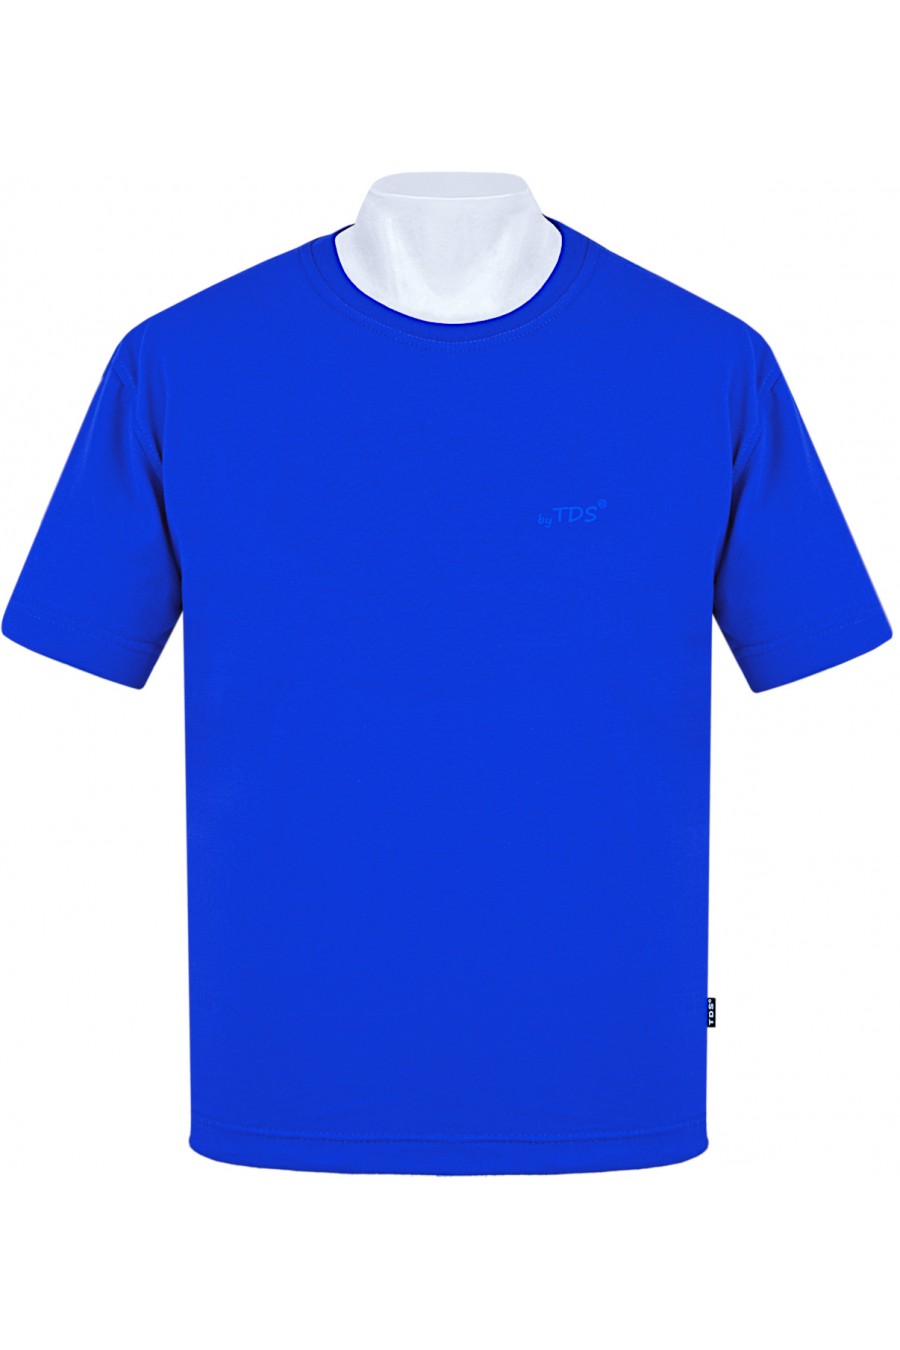 Koszulka Sportowa TS CLASSIC niebieska